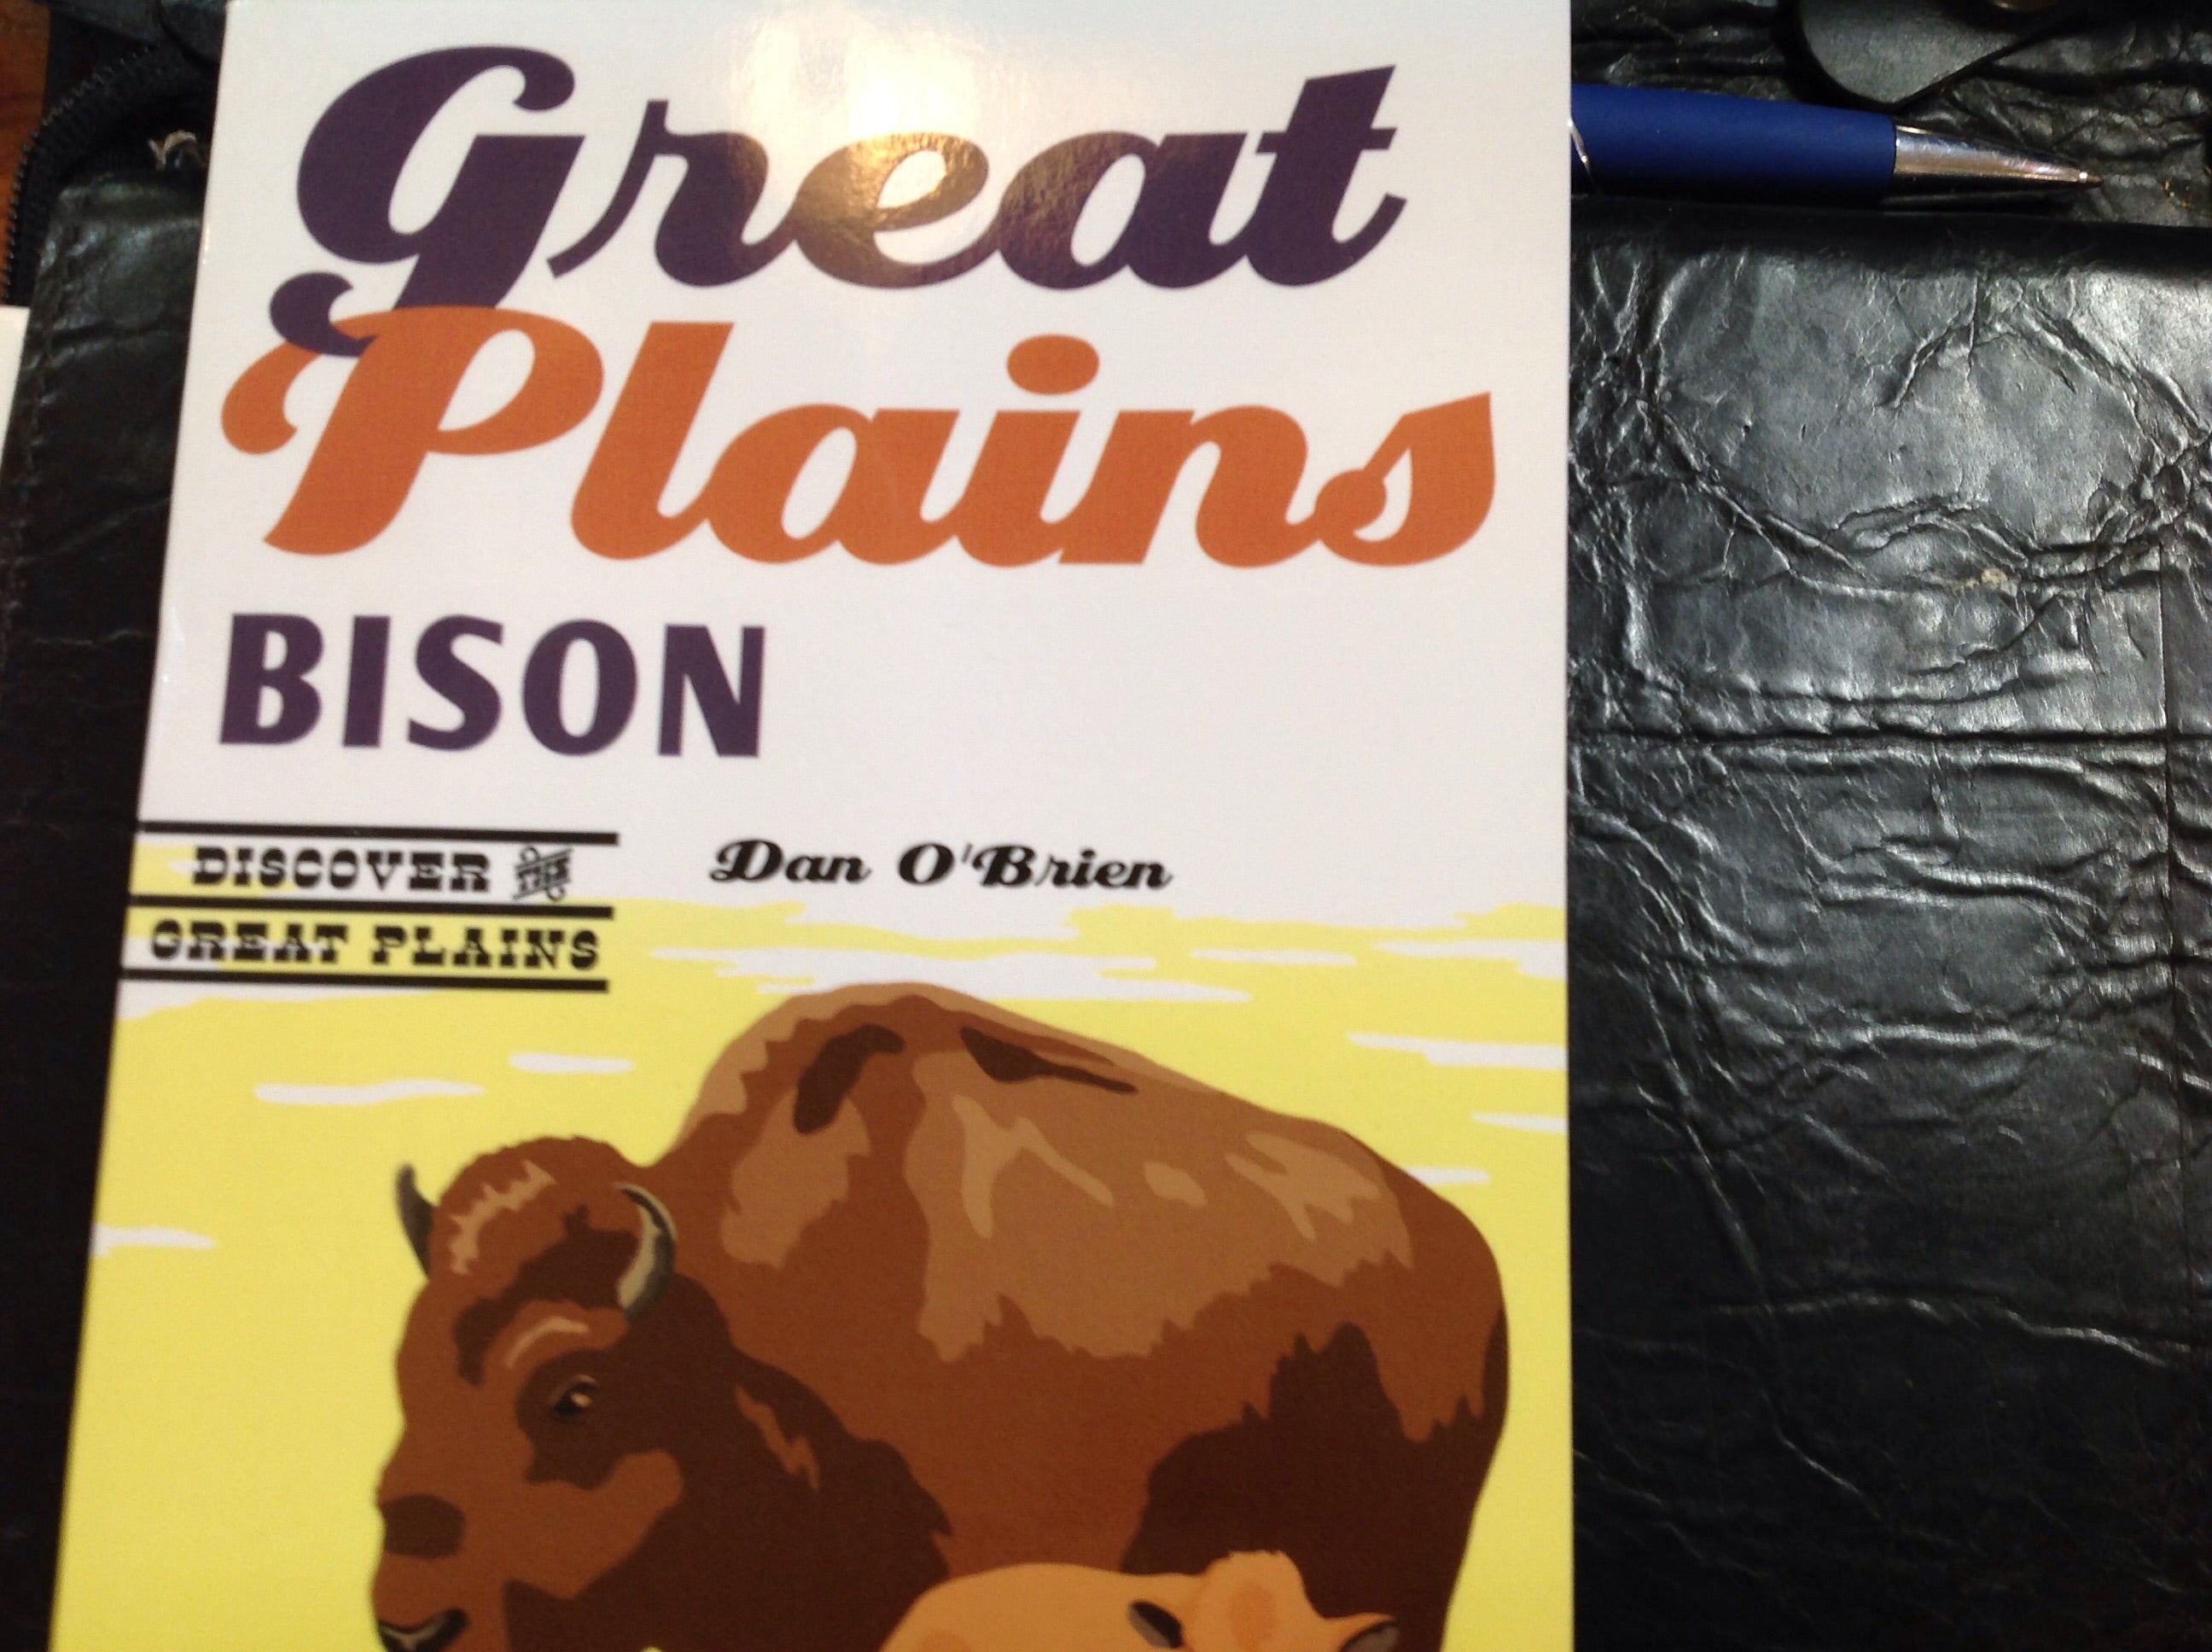 BOOKS - Great Plains Bison by Dan O'Brien